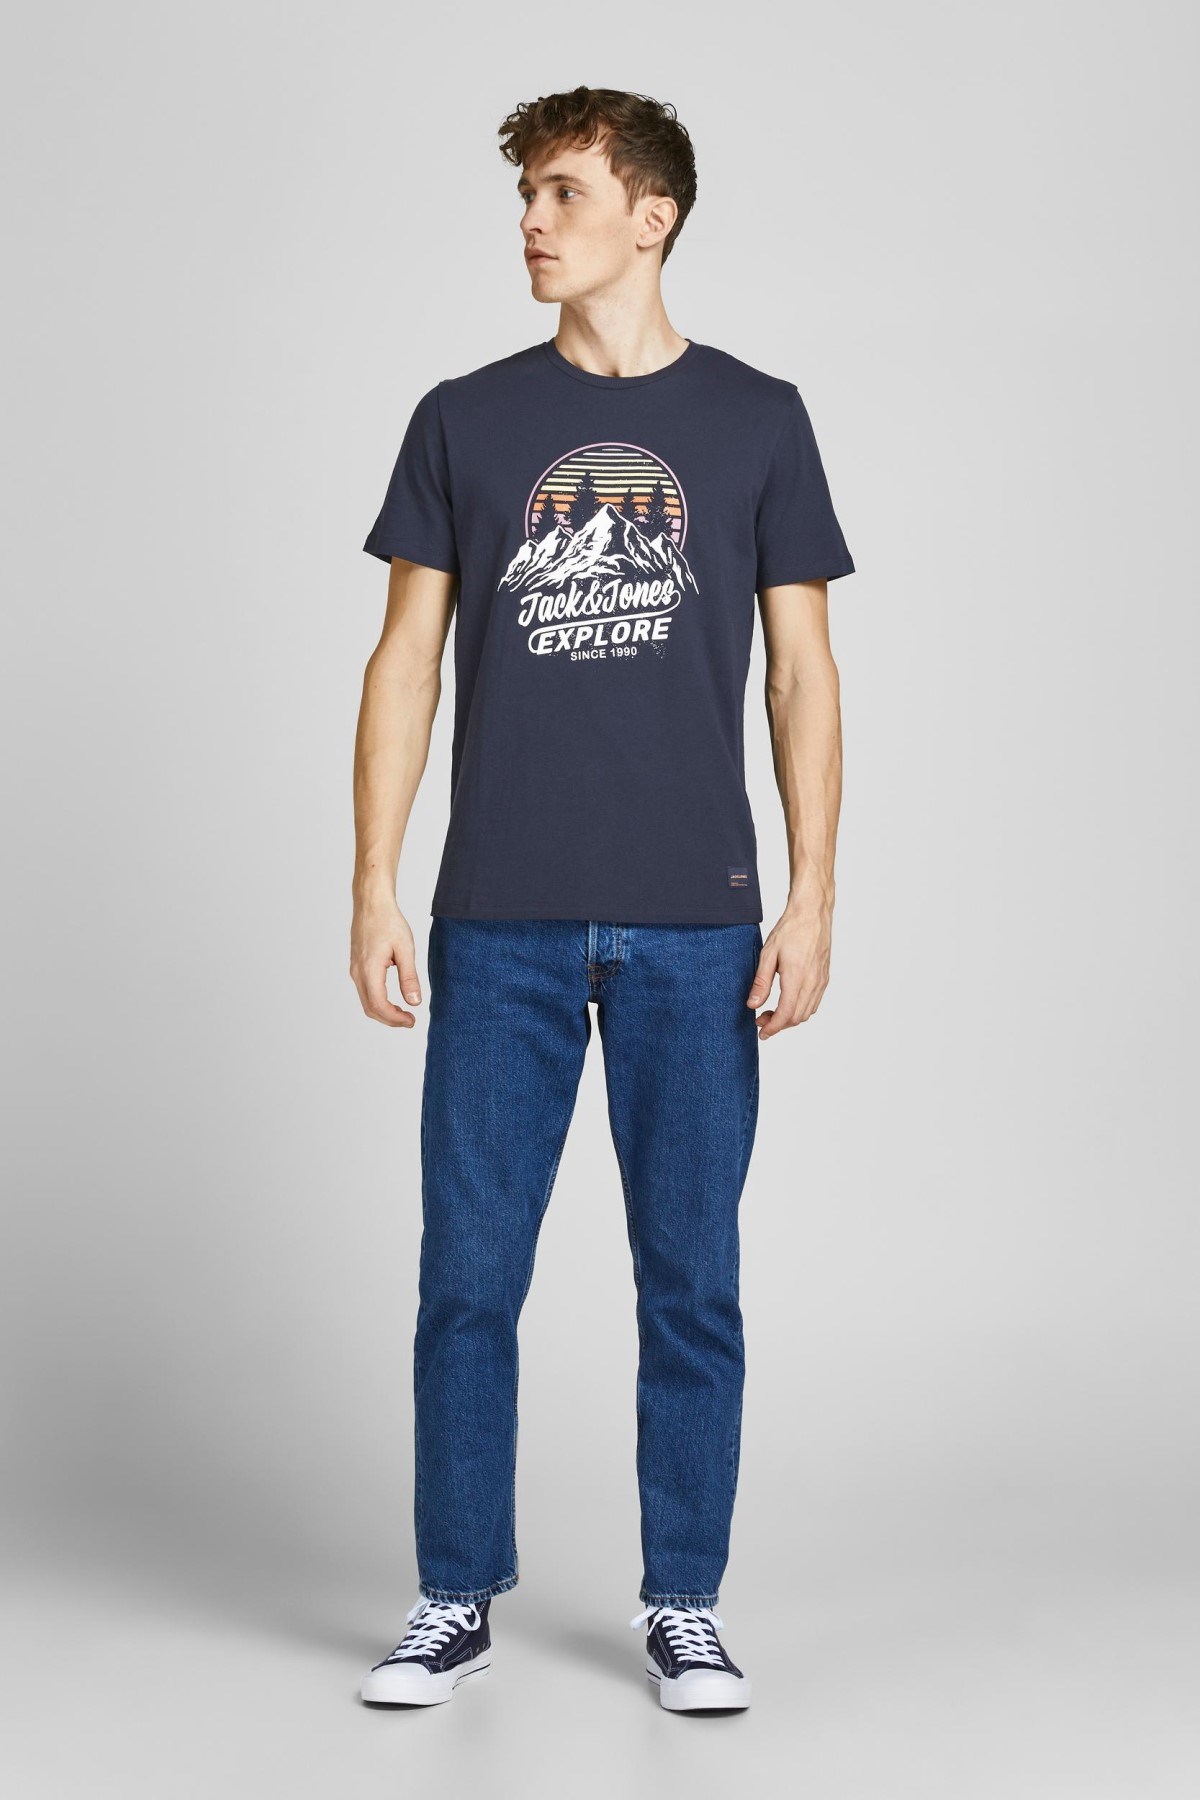 Jack Jones Erkek T-Shirt 12207474 Navy Blazer